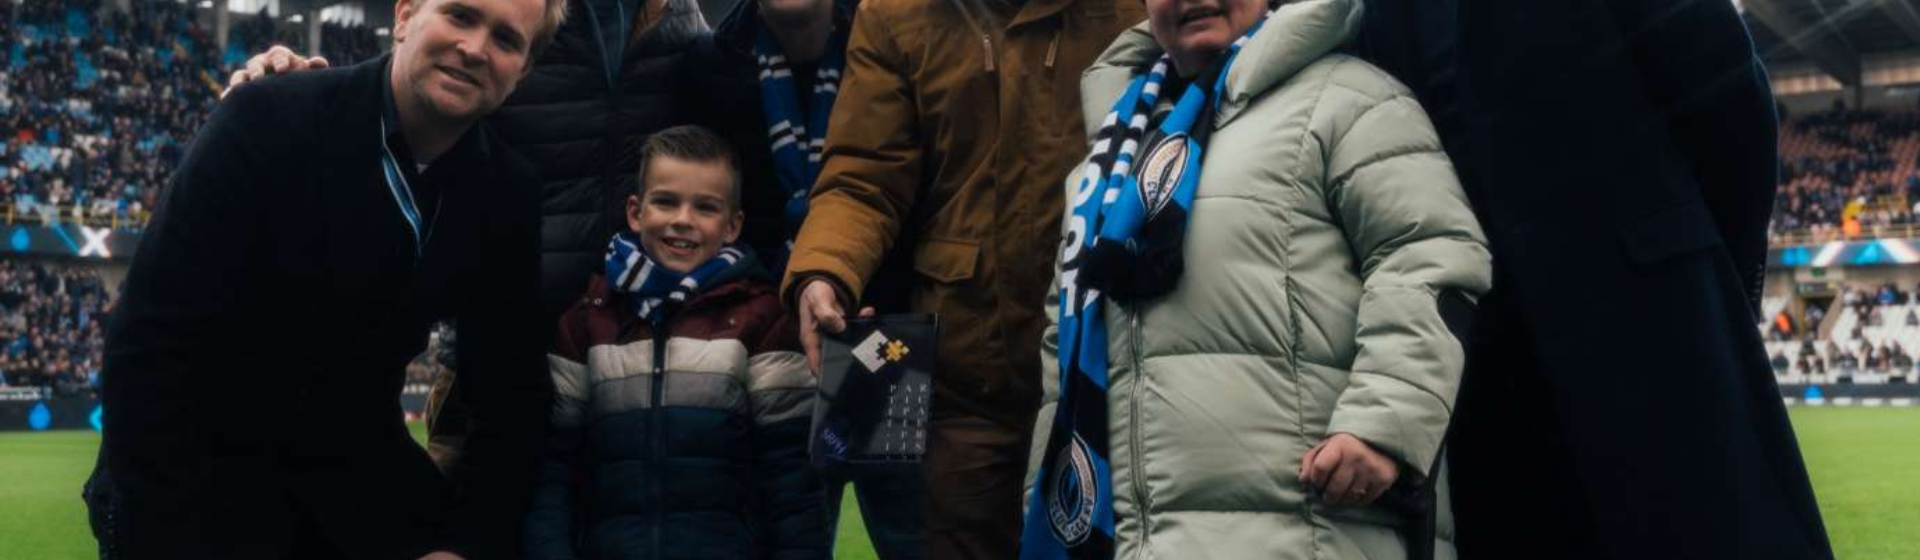 Club Brugge fans, Fans support Club Brugge football team as…